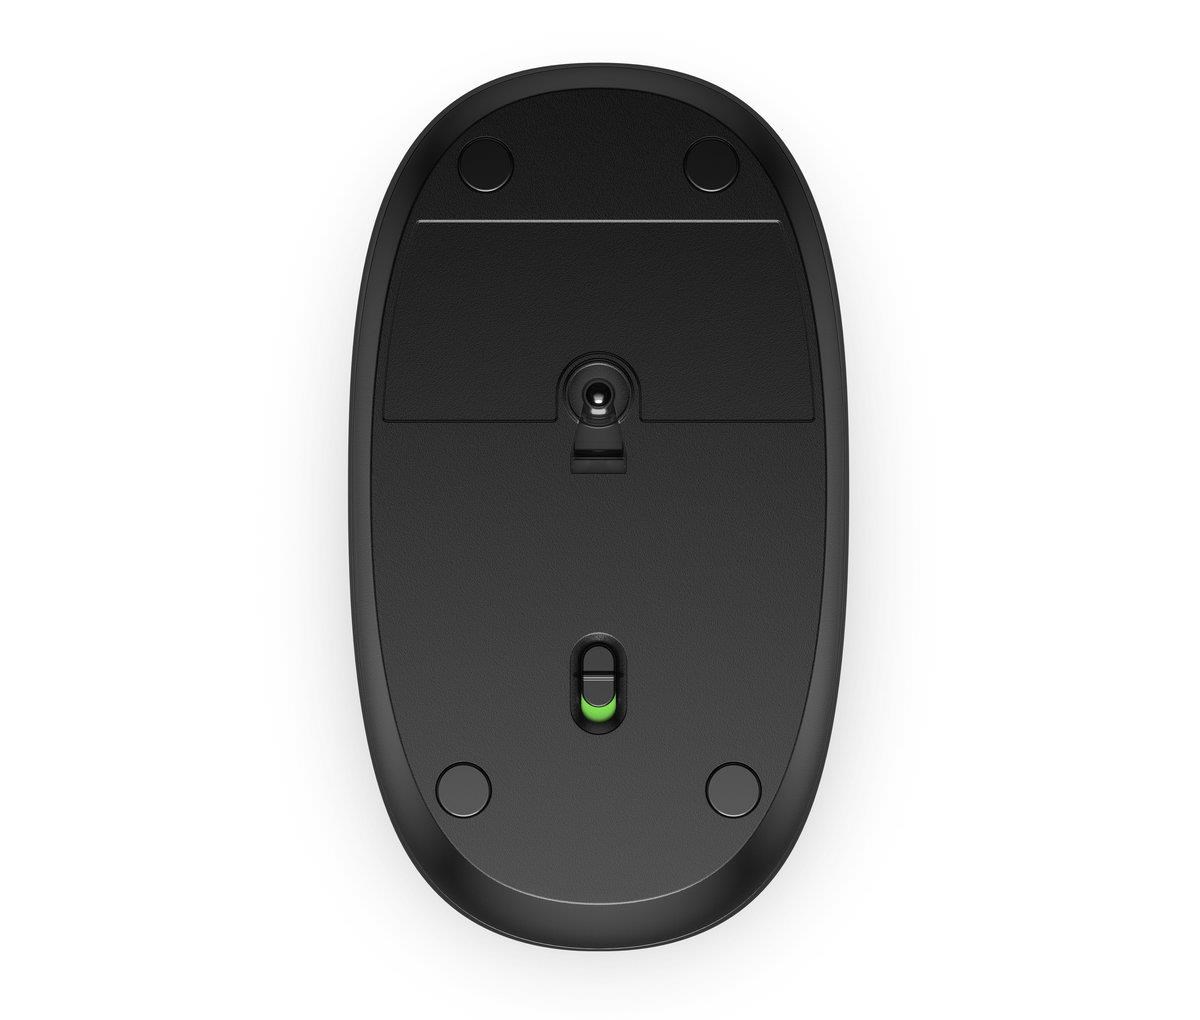 Myš HP - 240 Mouse EURO,  Bluetooth,  čierna0 